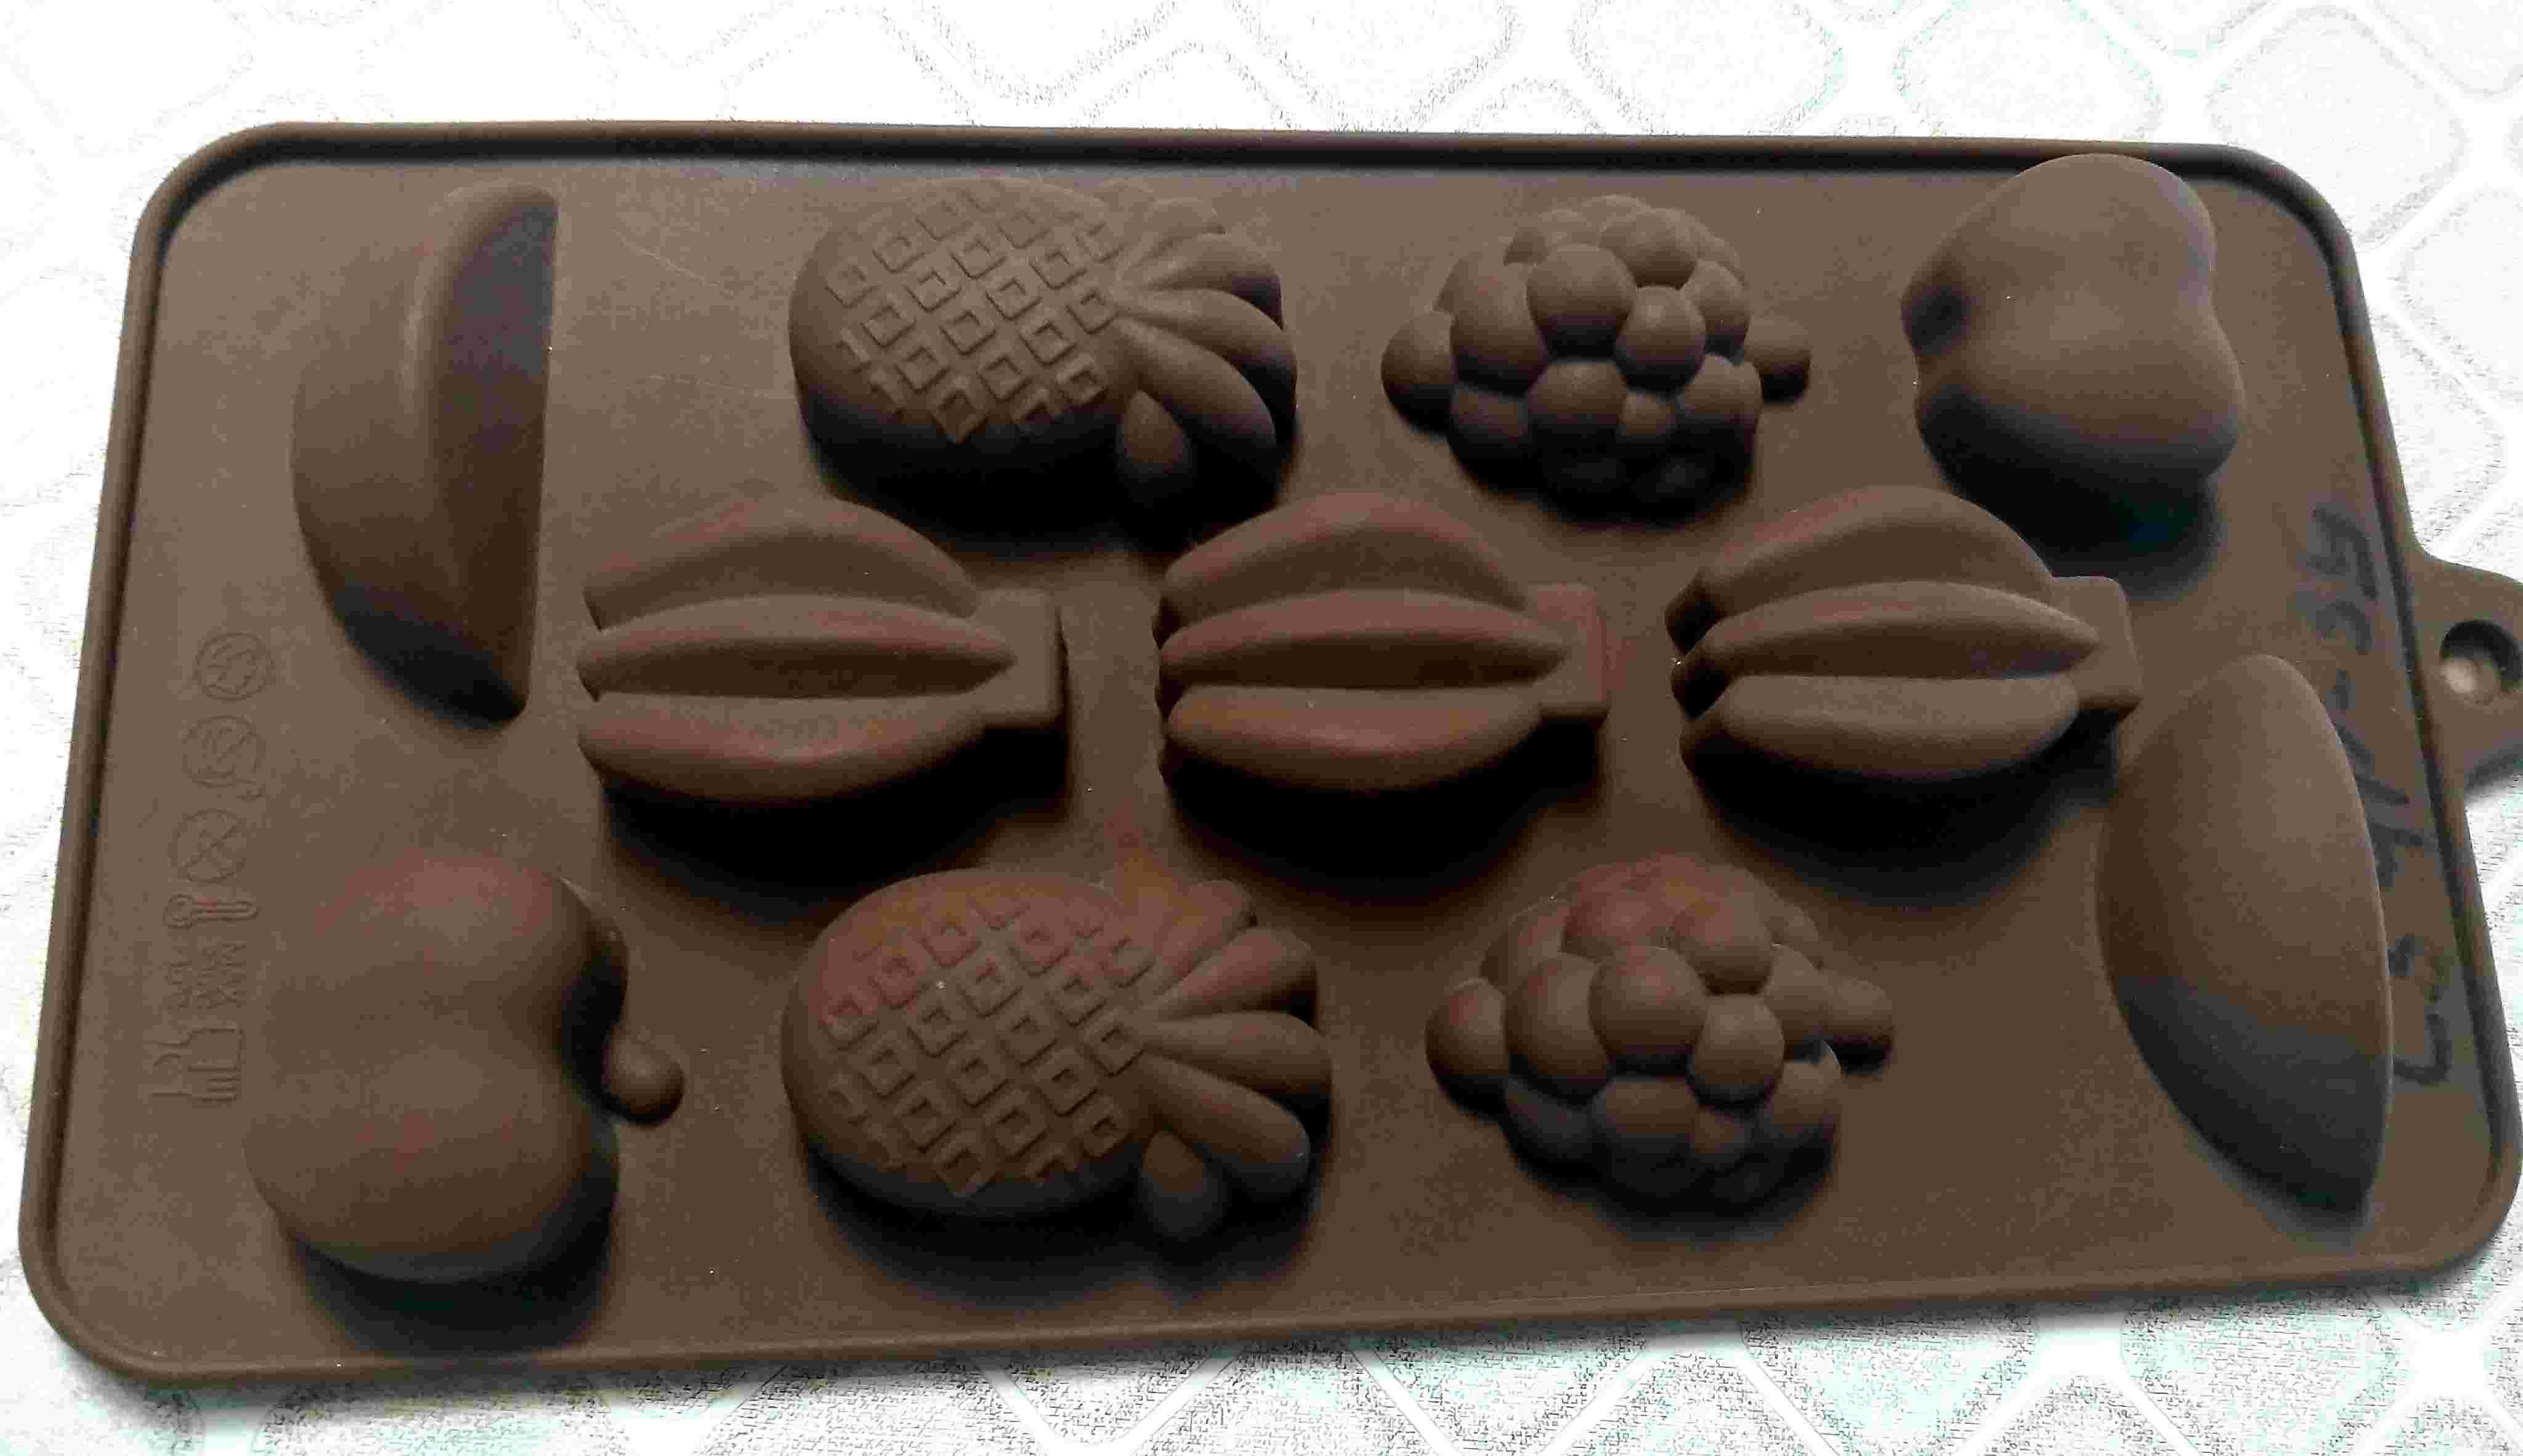 Chocolate 9